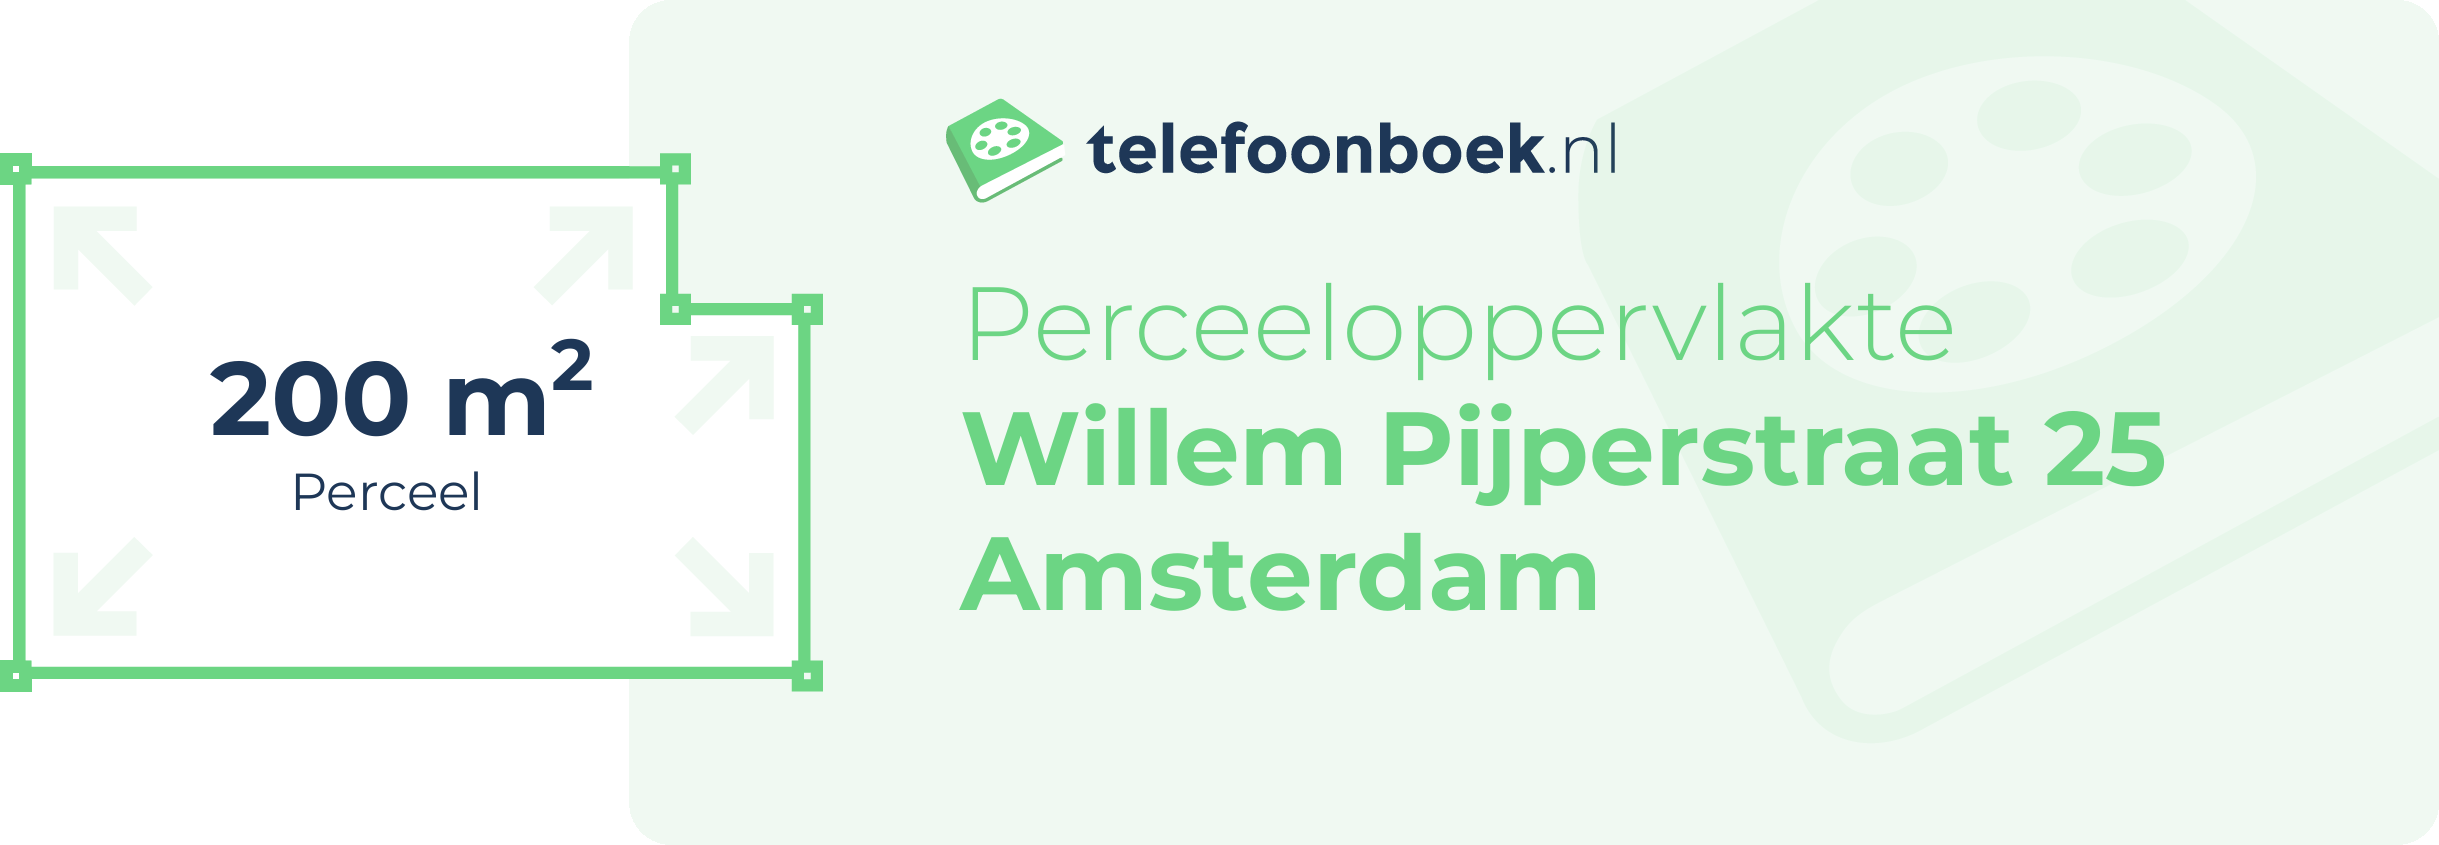 Perceeloppervlakte Willem Pijperstraat 25 Amsterdam